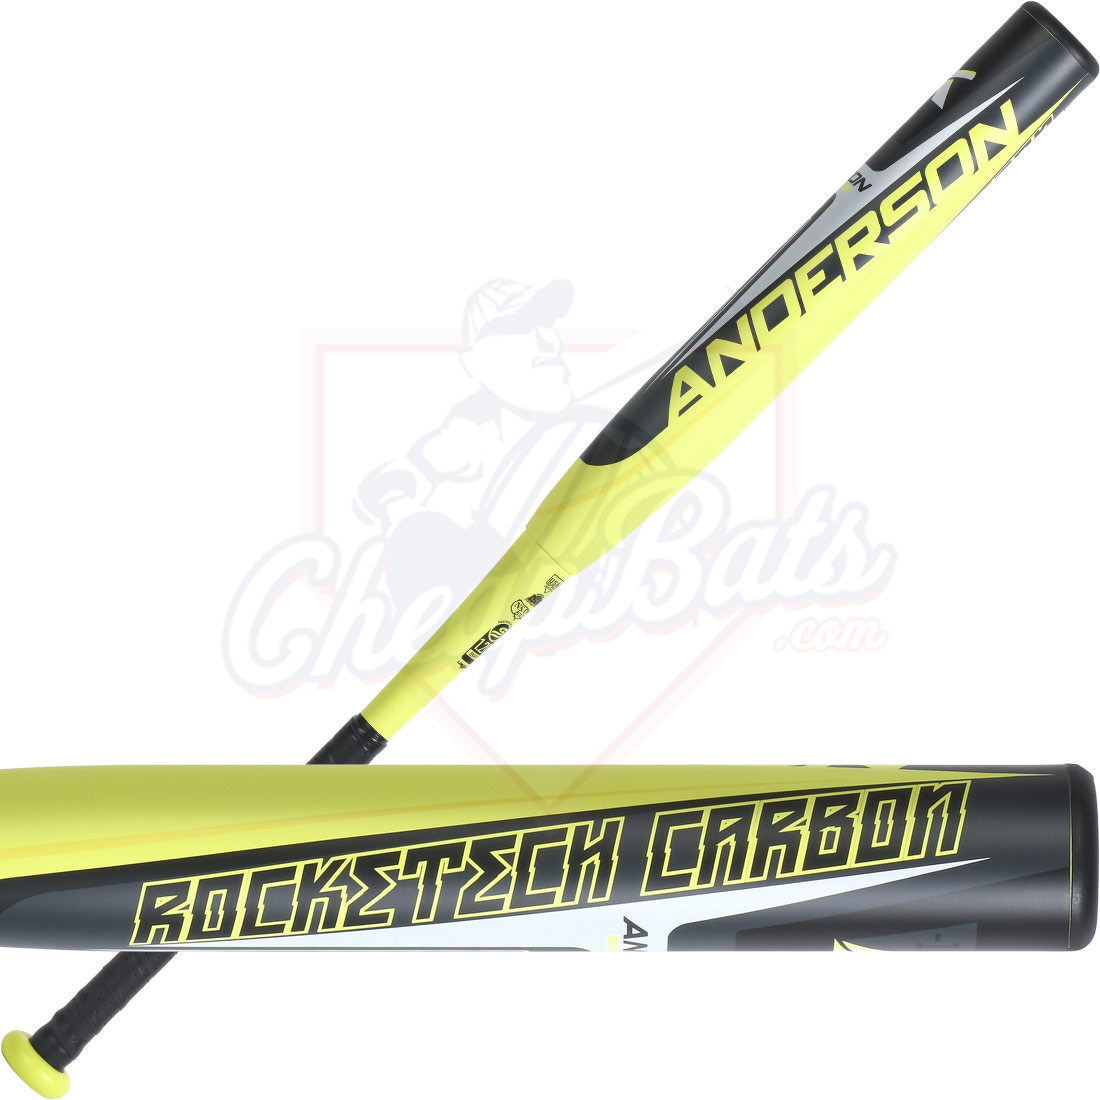 2021 Anderson RockeTech Carbon Fastpitch Softball Bat -10oz 017046